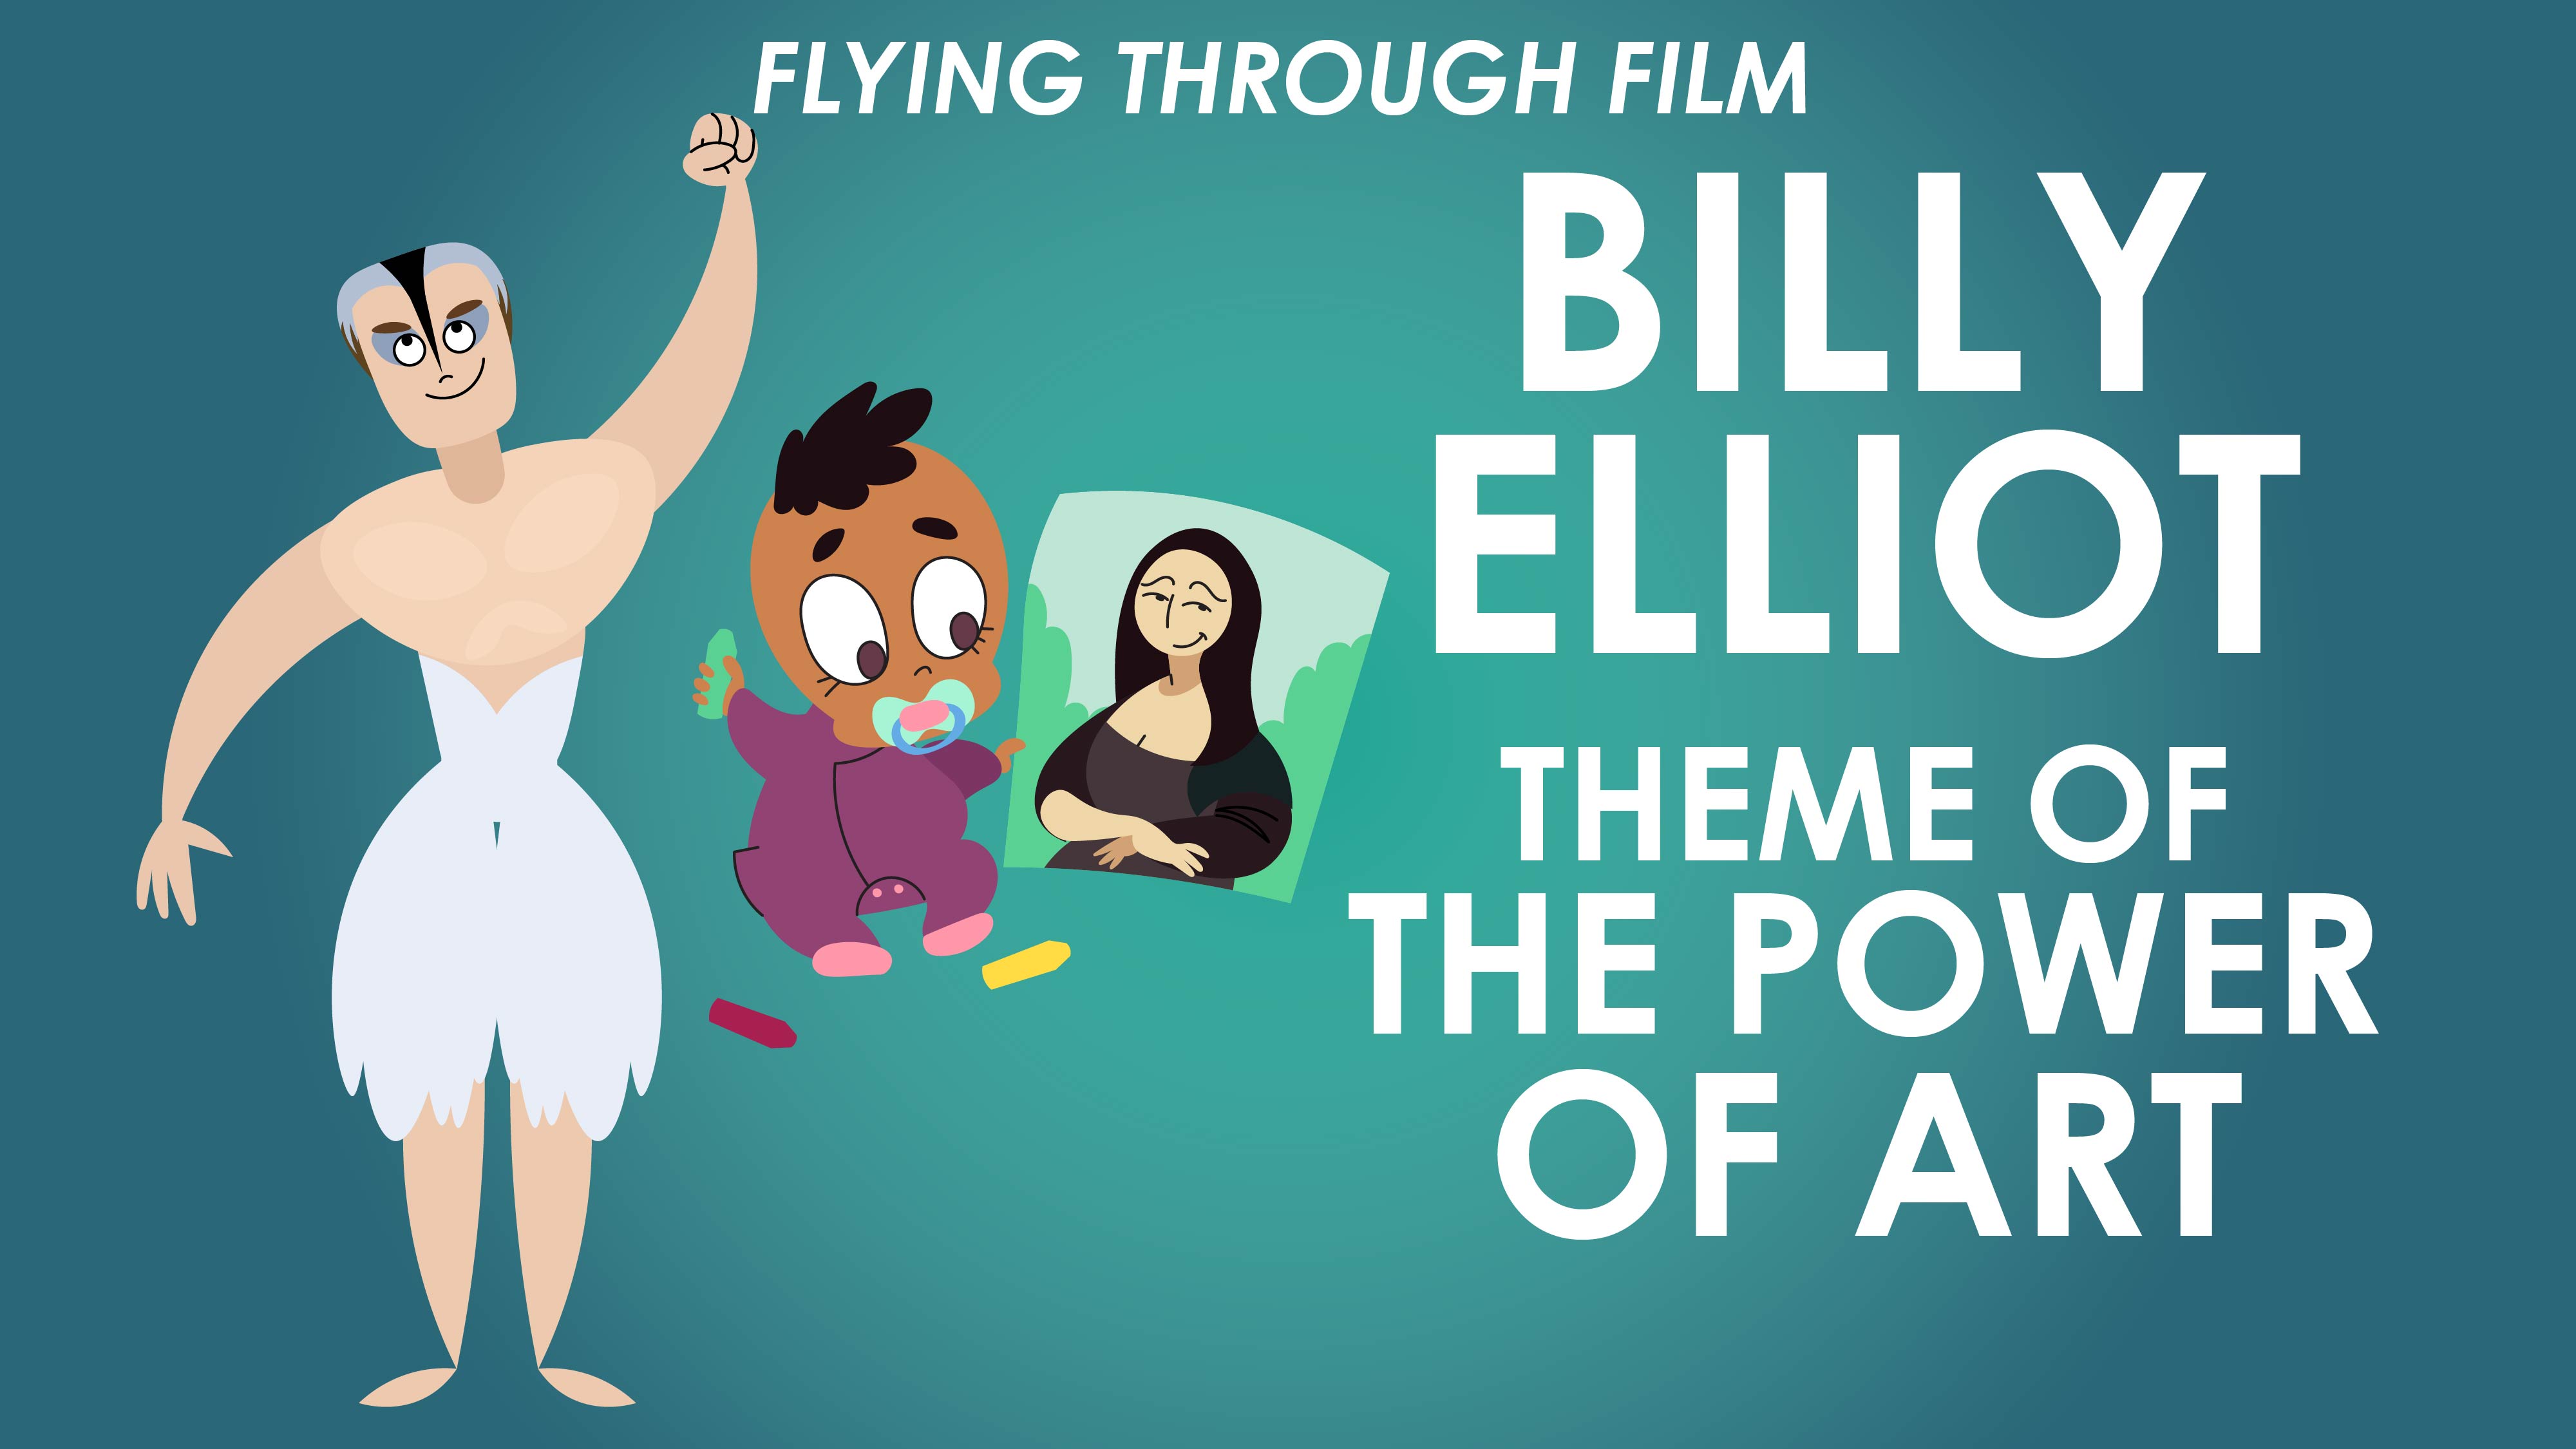 Billy Elliot - Theme of The Power of Art - Flying Through Film Series